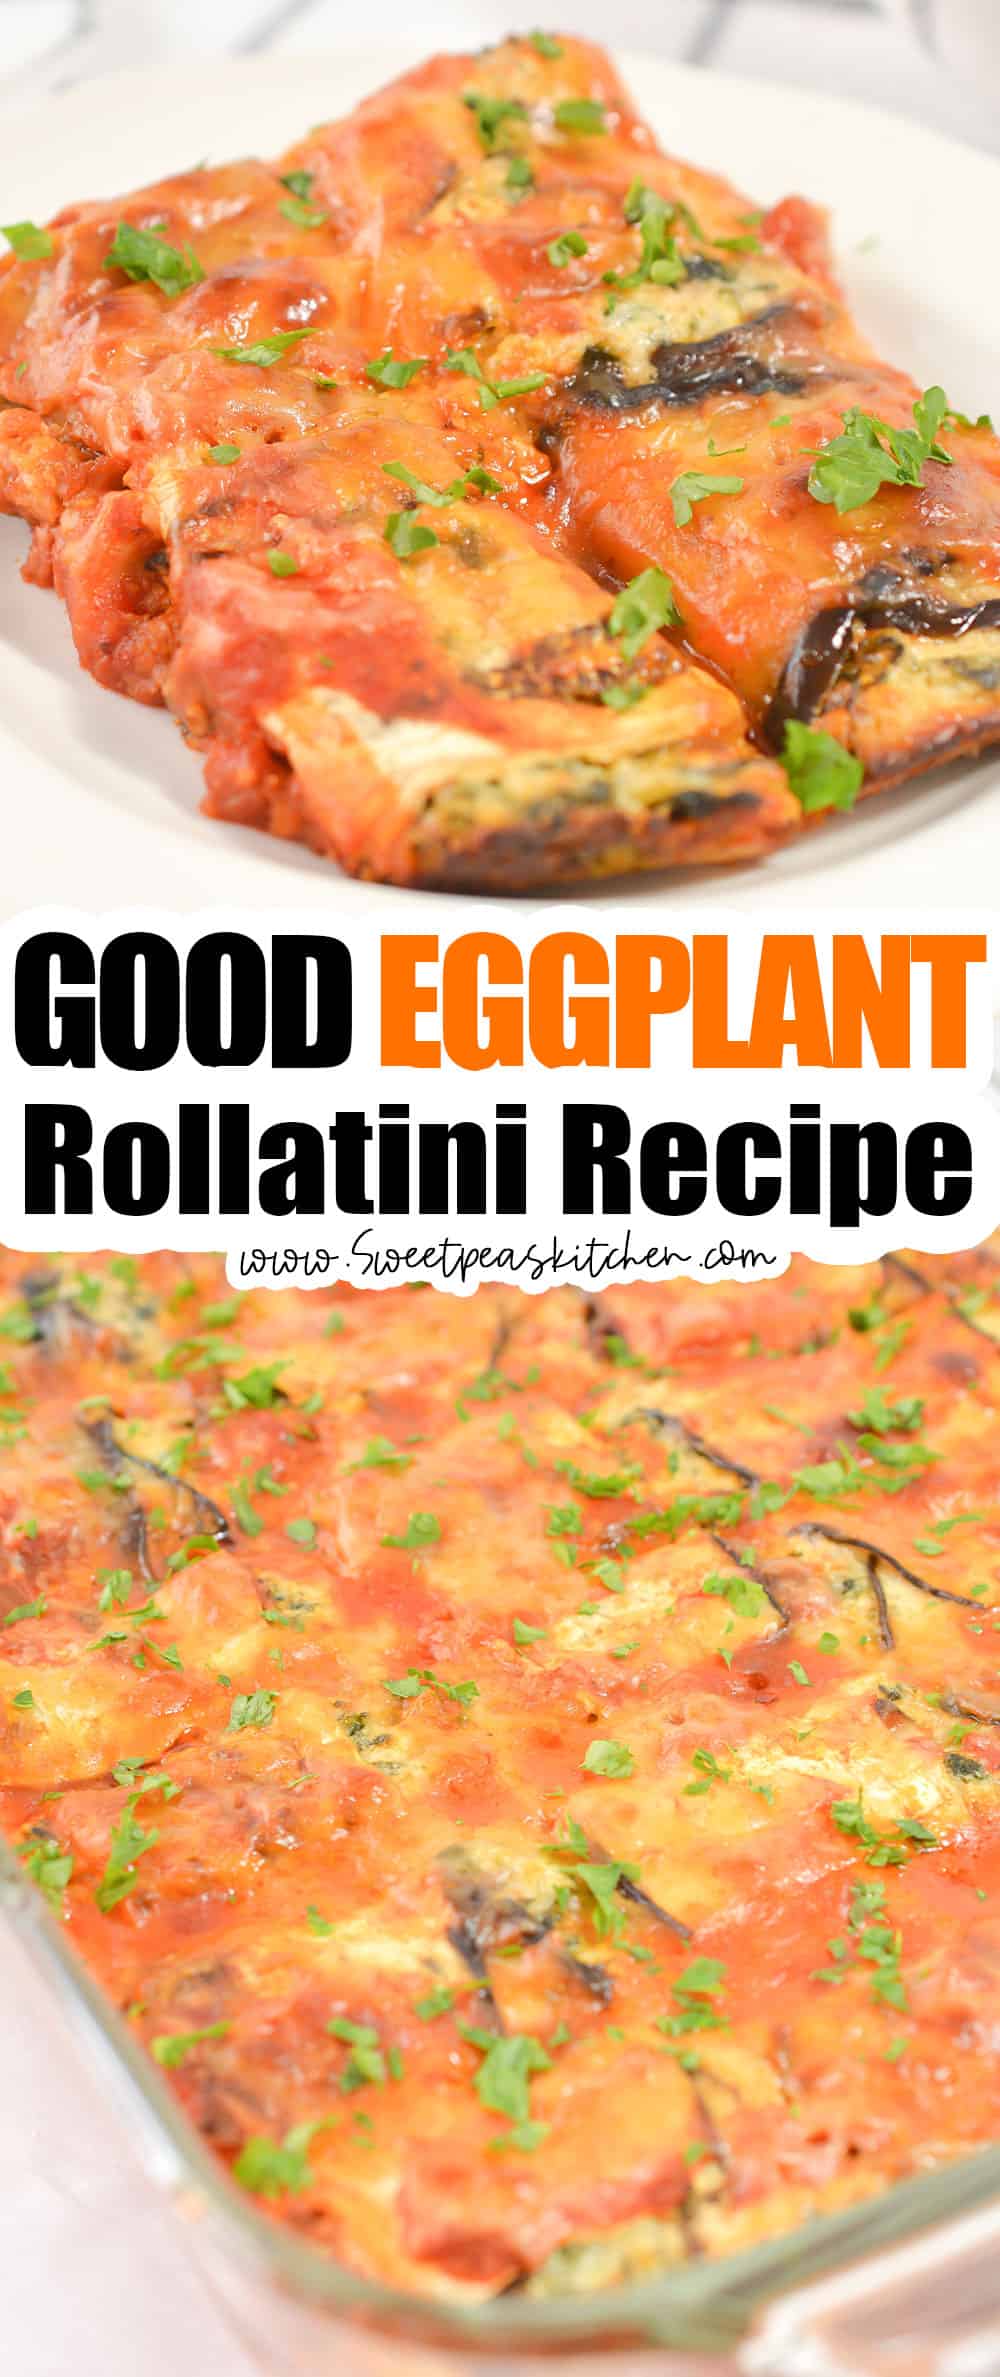 Eggplant Rollatini